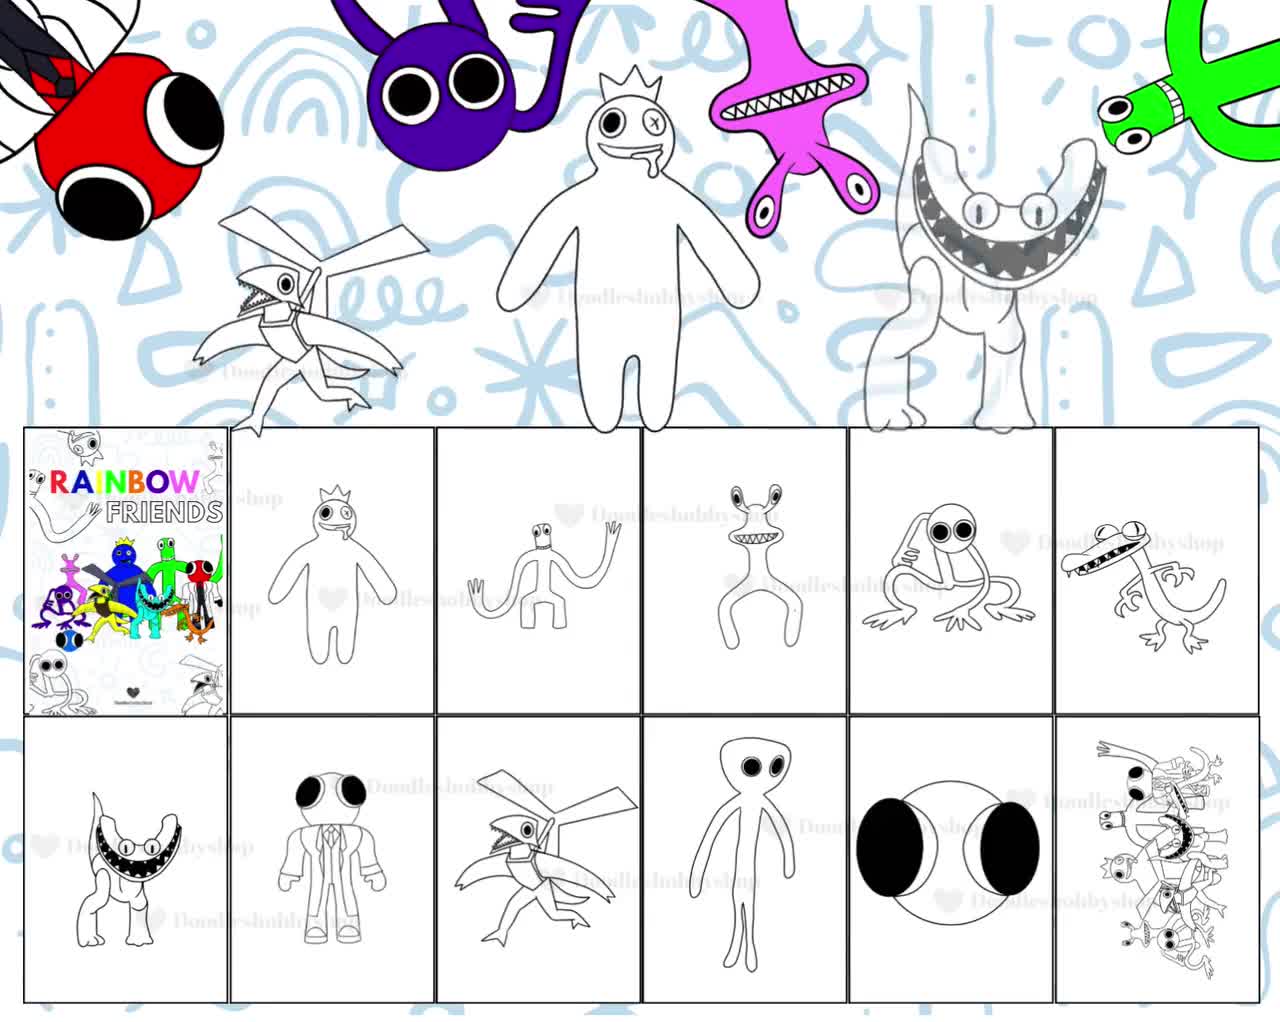 Blue Raising Hand Rainbow Friends Roblox  Free halloween coloring pages,  Coloring pages, Coloring pages for kids